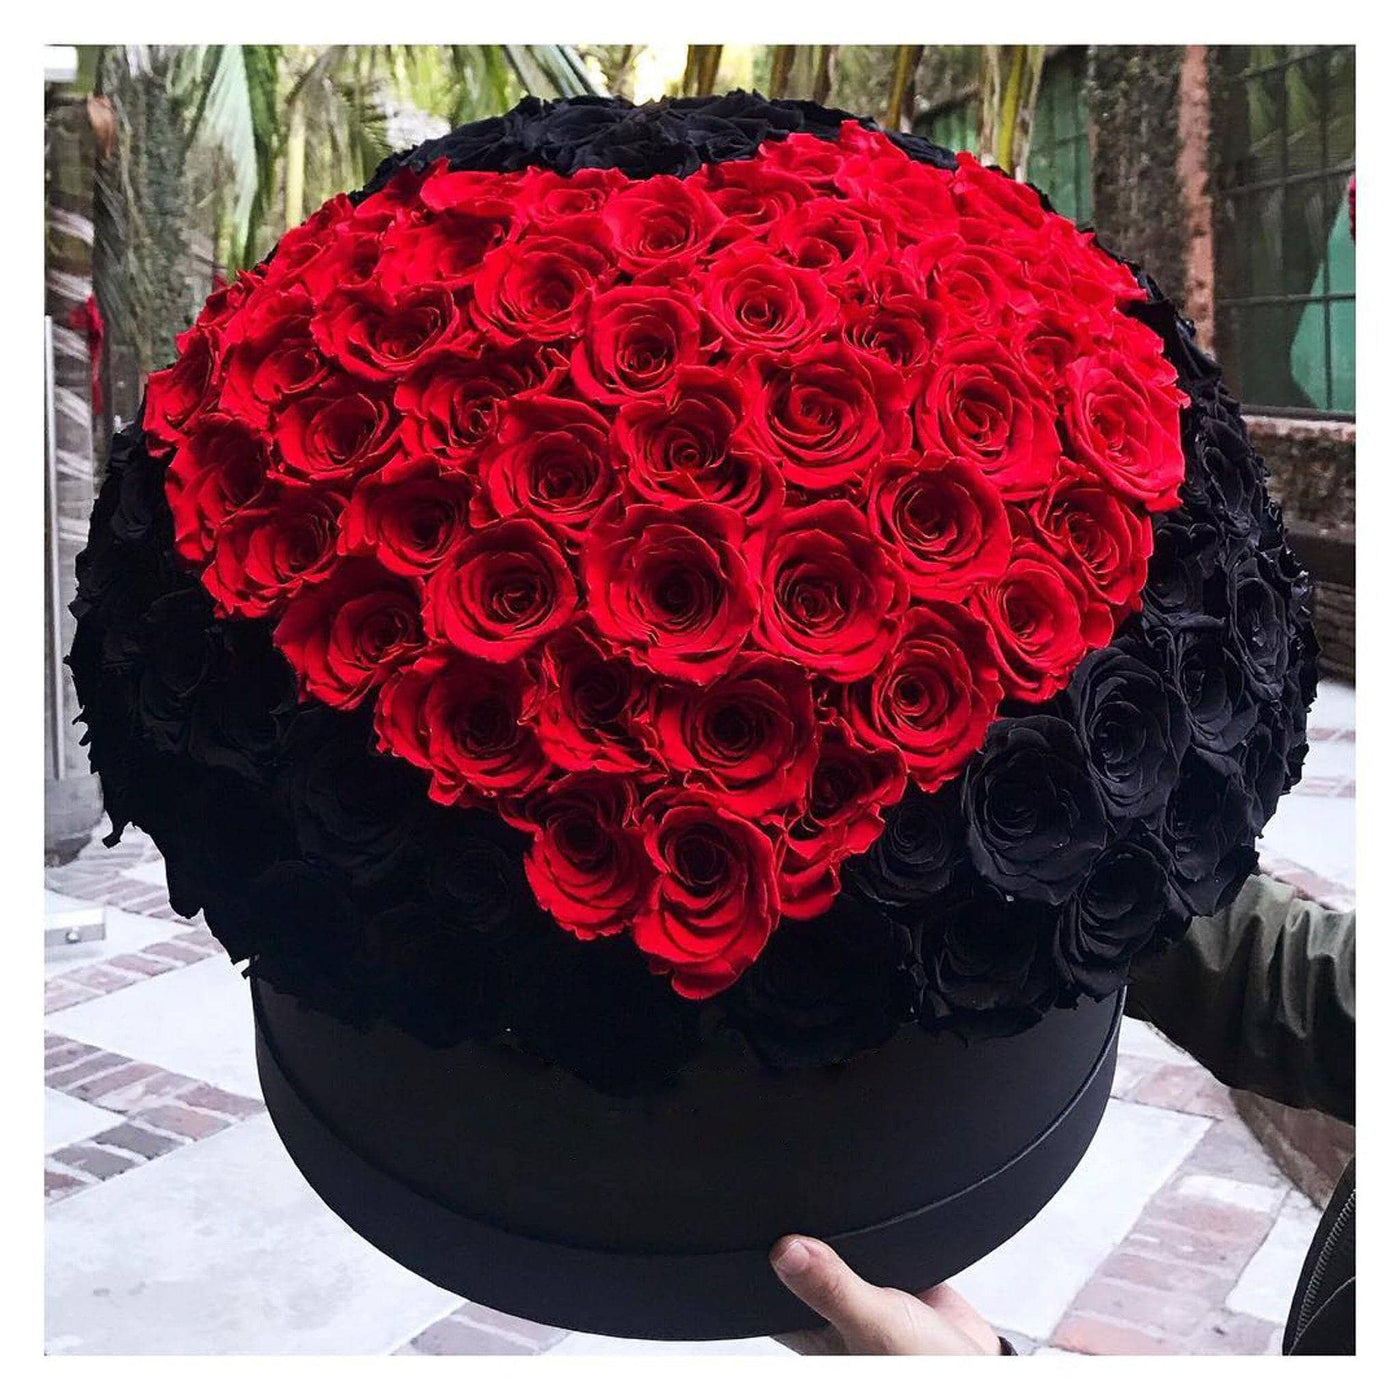 De Lux Acrylic I Love U Box - Preserved Roses